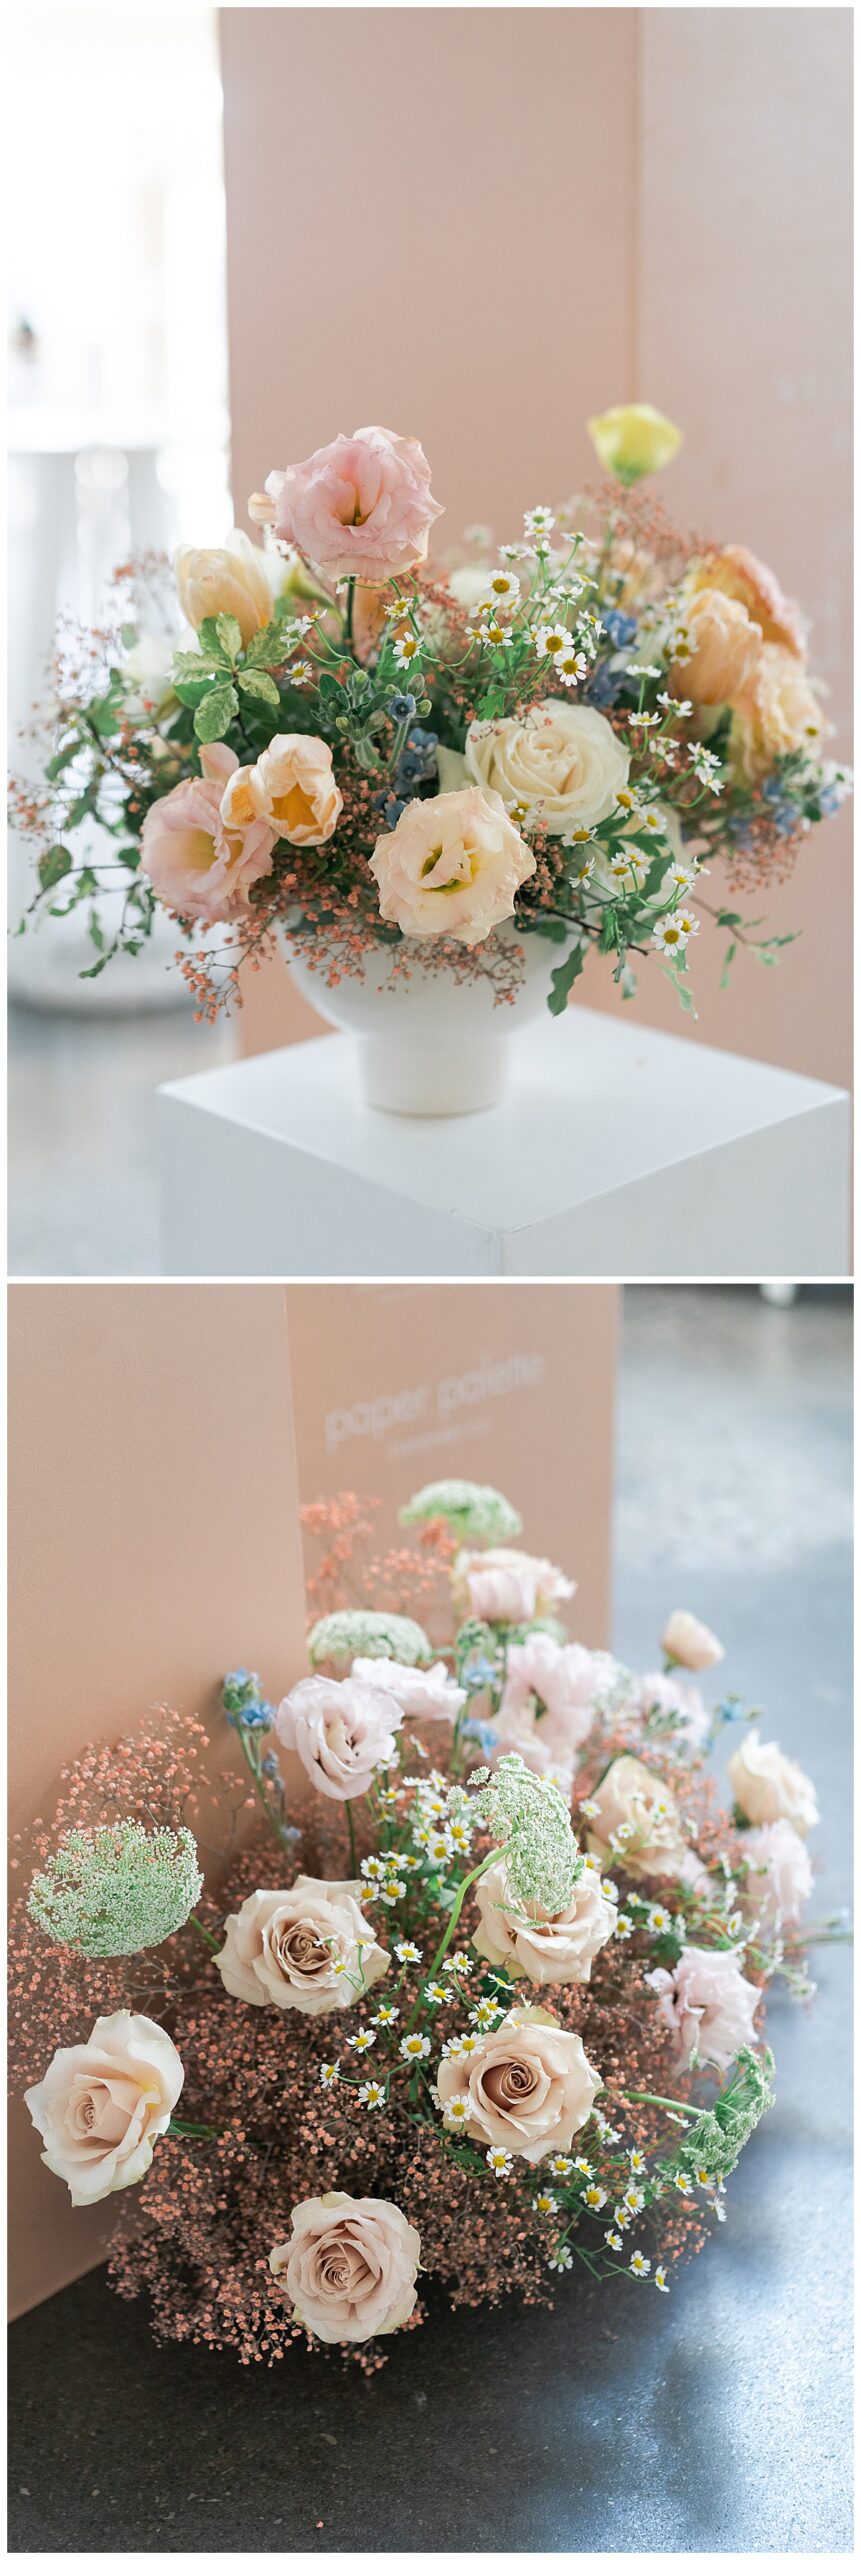 Boho-inspired floral arrangements for Houston’s Best Wedding Photographers